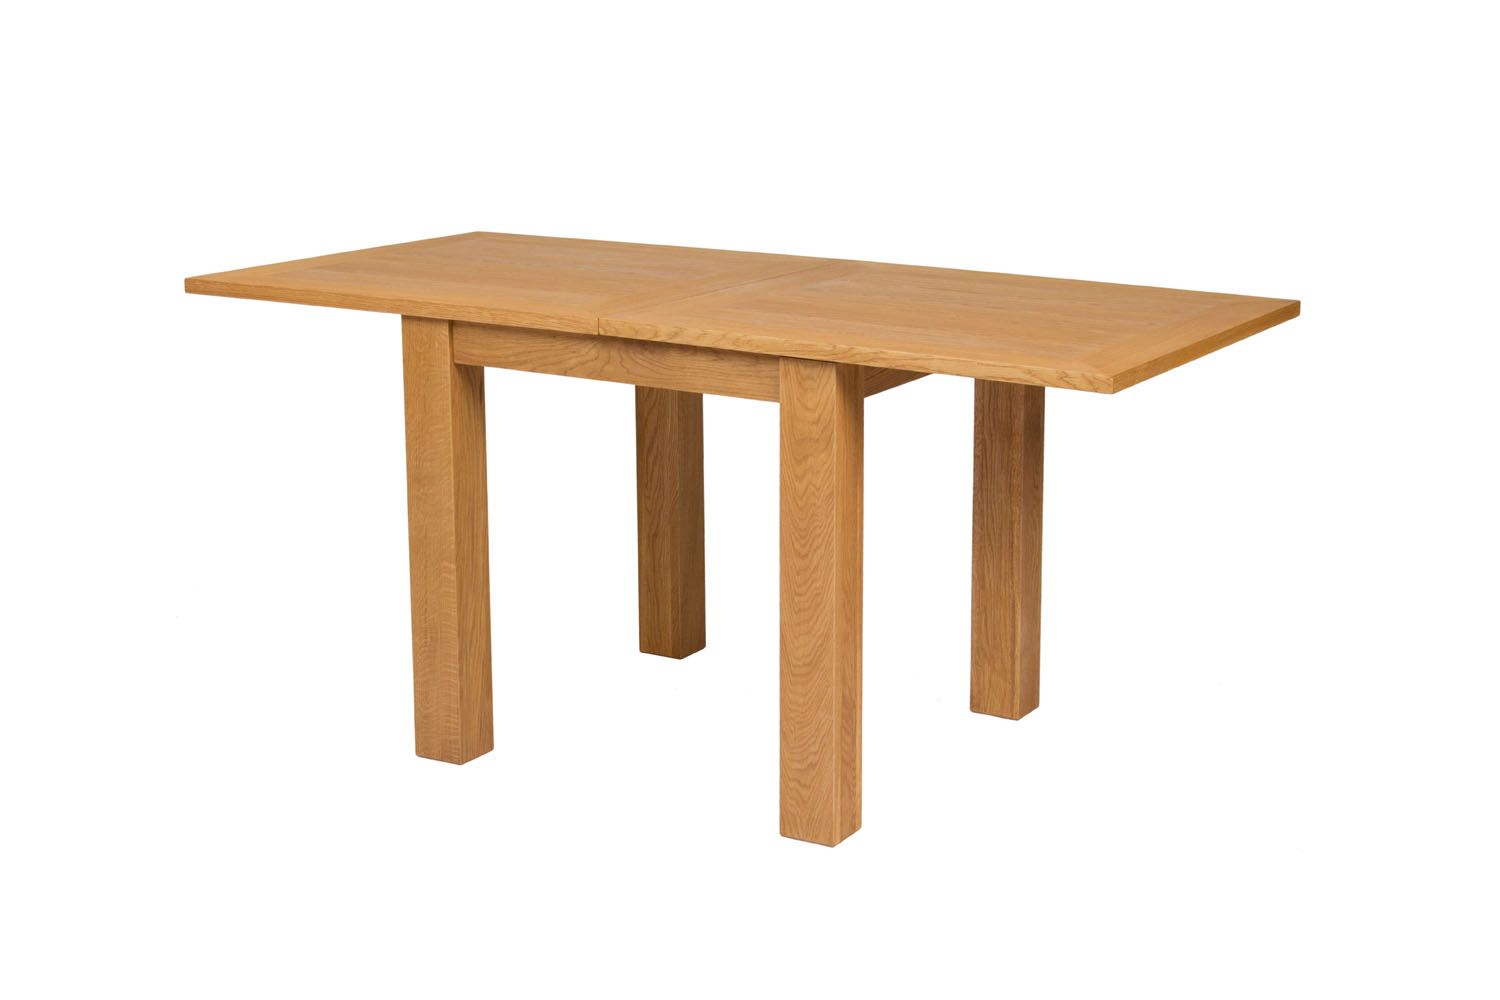 Lichfield Flip Top Oak Dining Table 80cm x 80cm 80cm x 160cm size